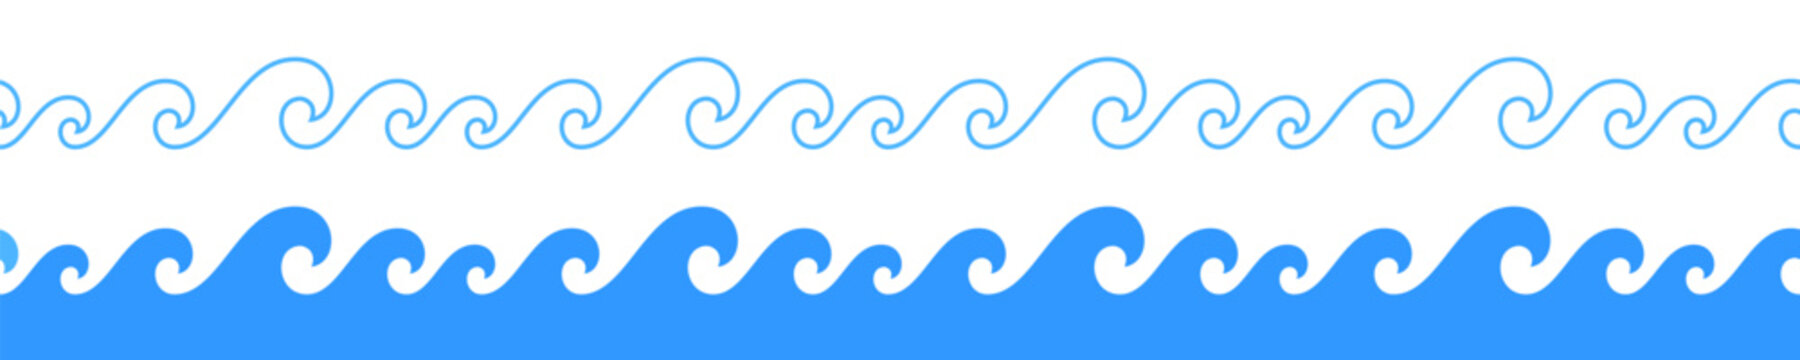 Sea wave line. Vector ocean wave shape pattern. Water line background. Seamless marine decoration pattern background